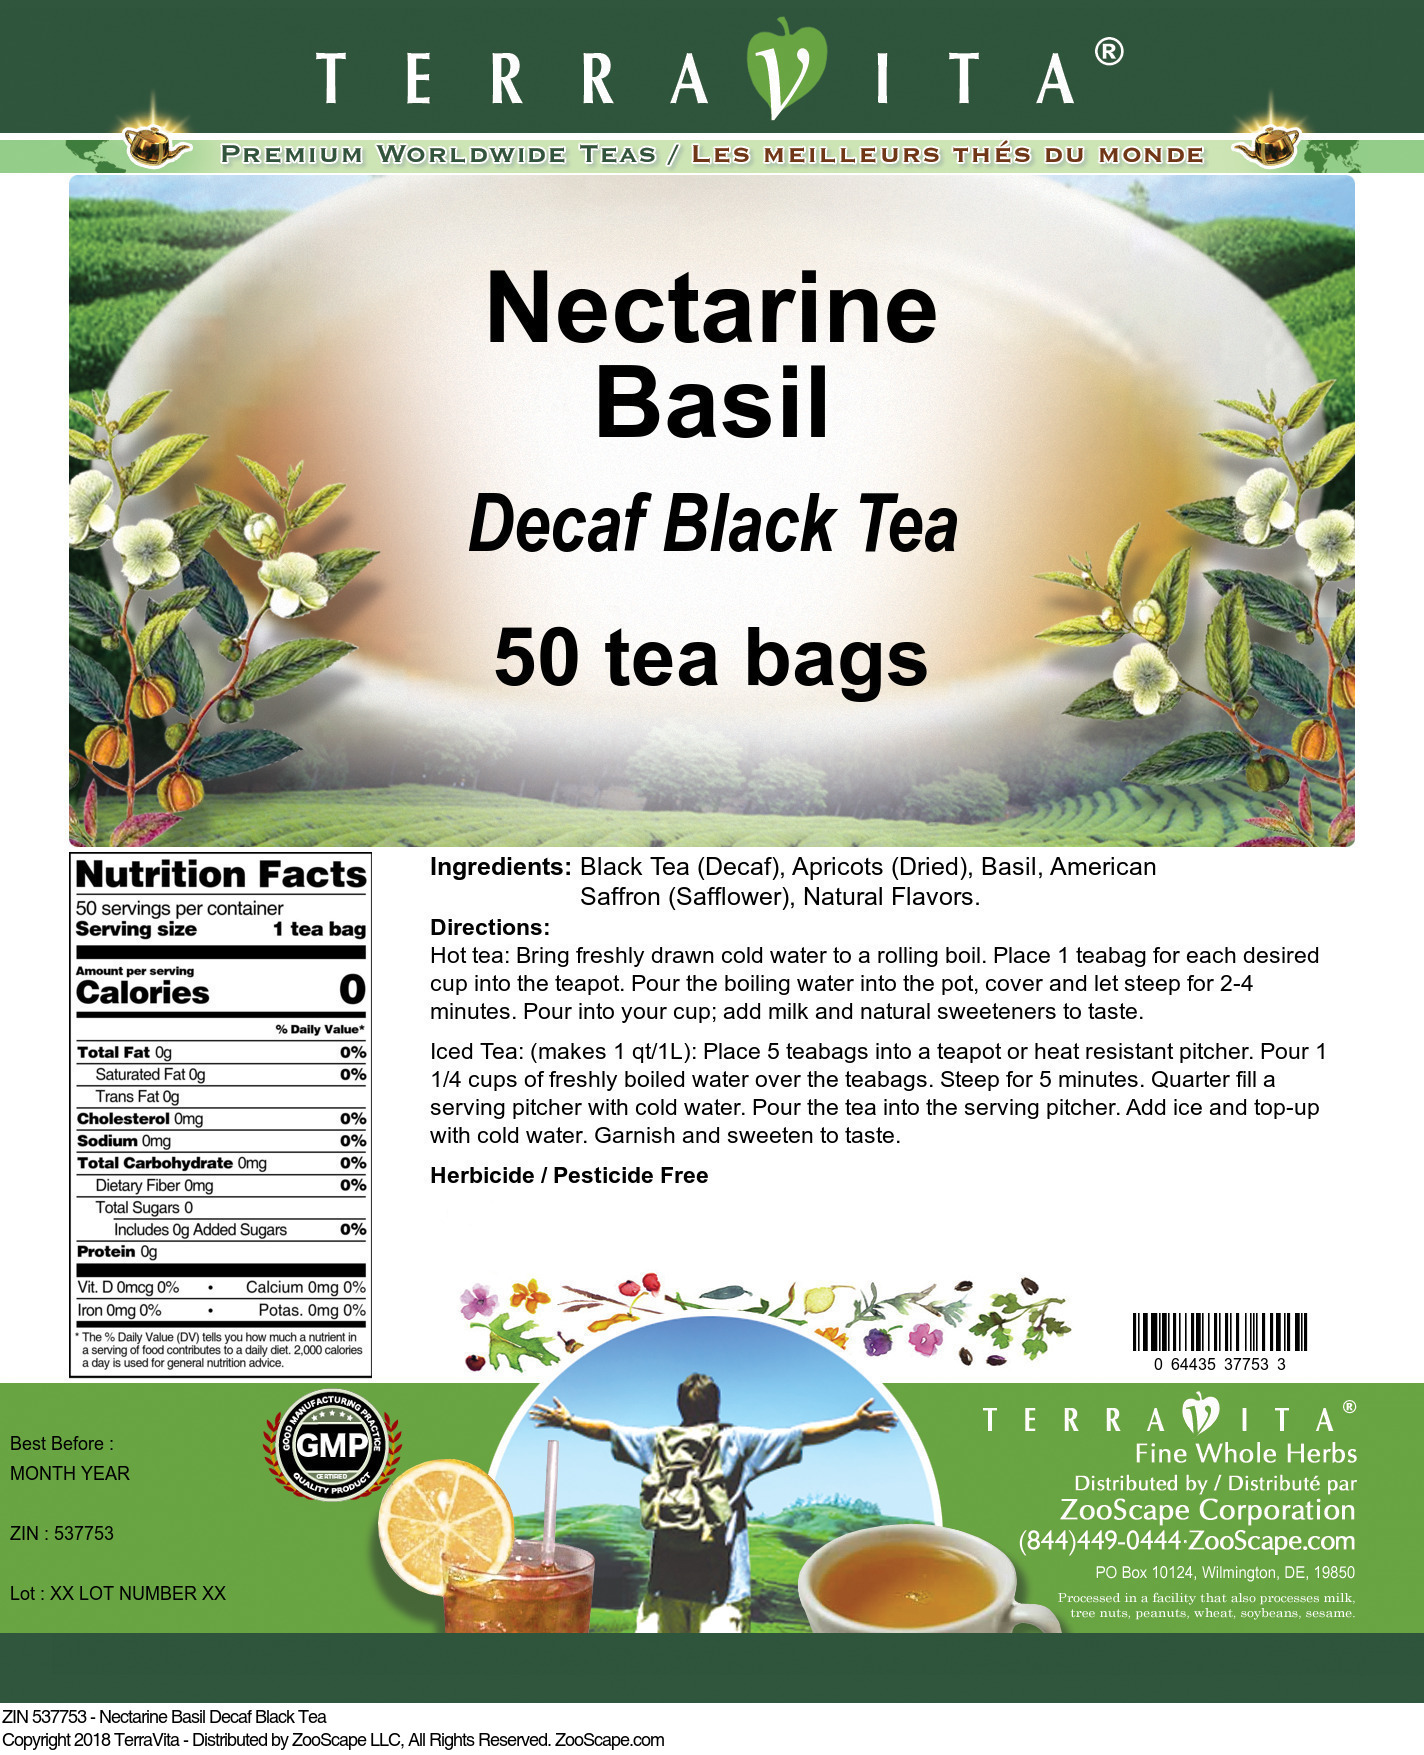 Nectarine Basil Decaf Black Tea - Label